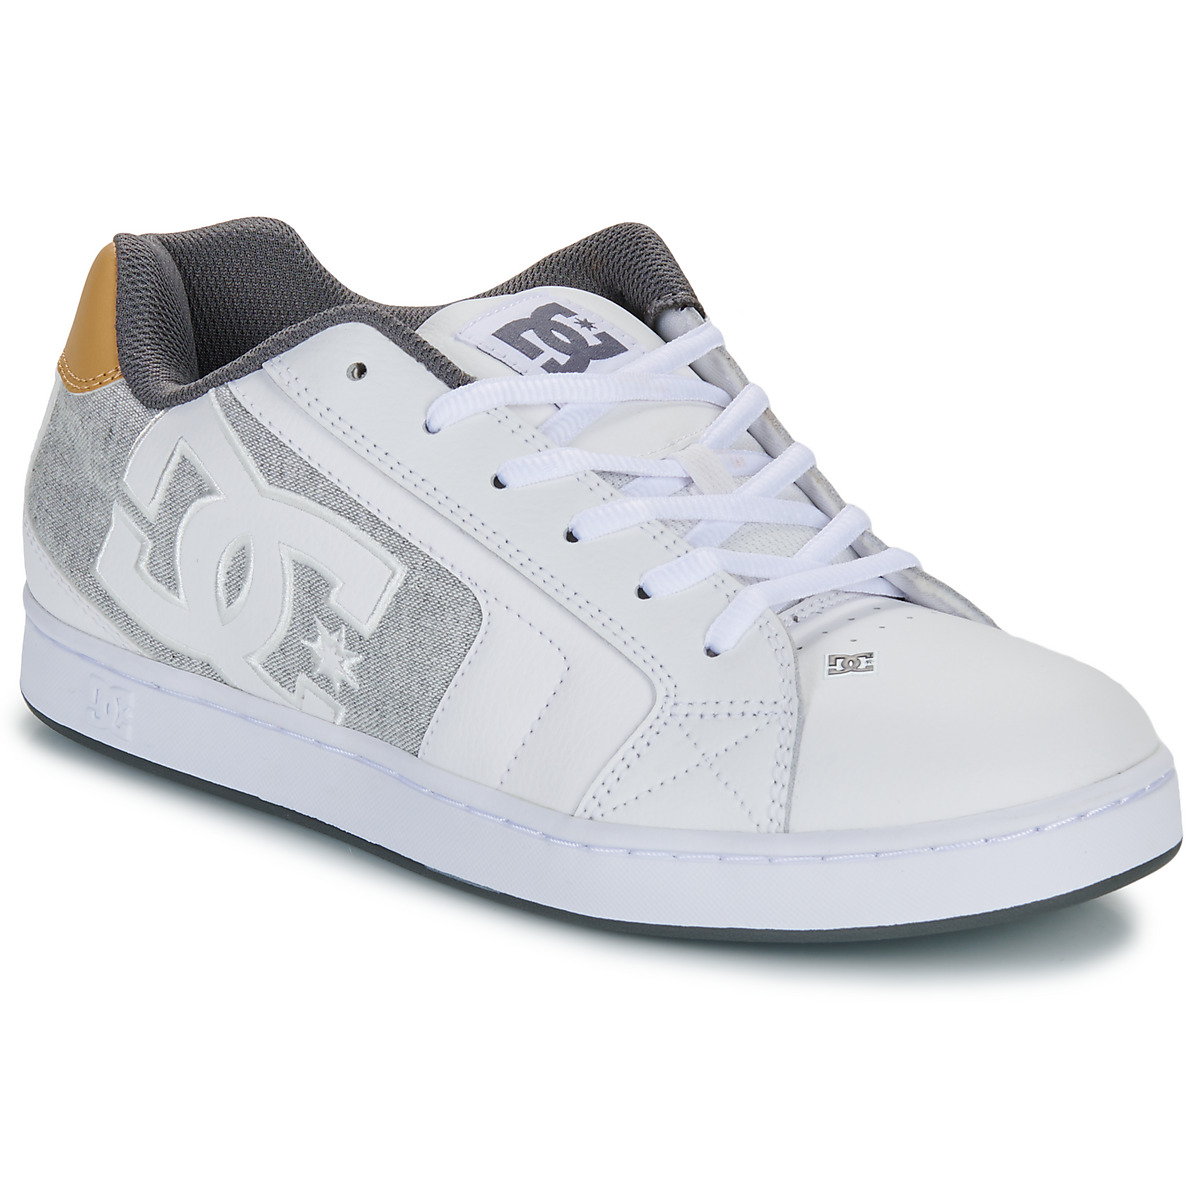 Scarpe Uomo Sneakers basse DC Shoes NET Bianco / Grigio